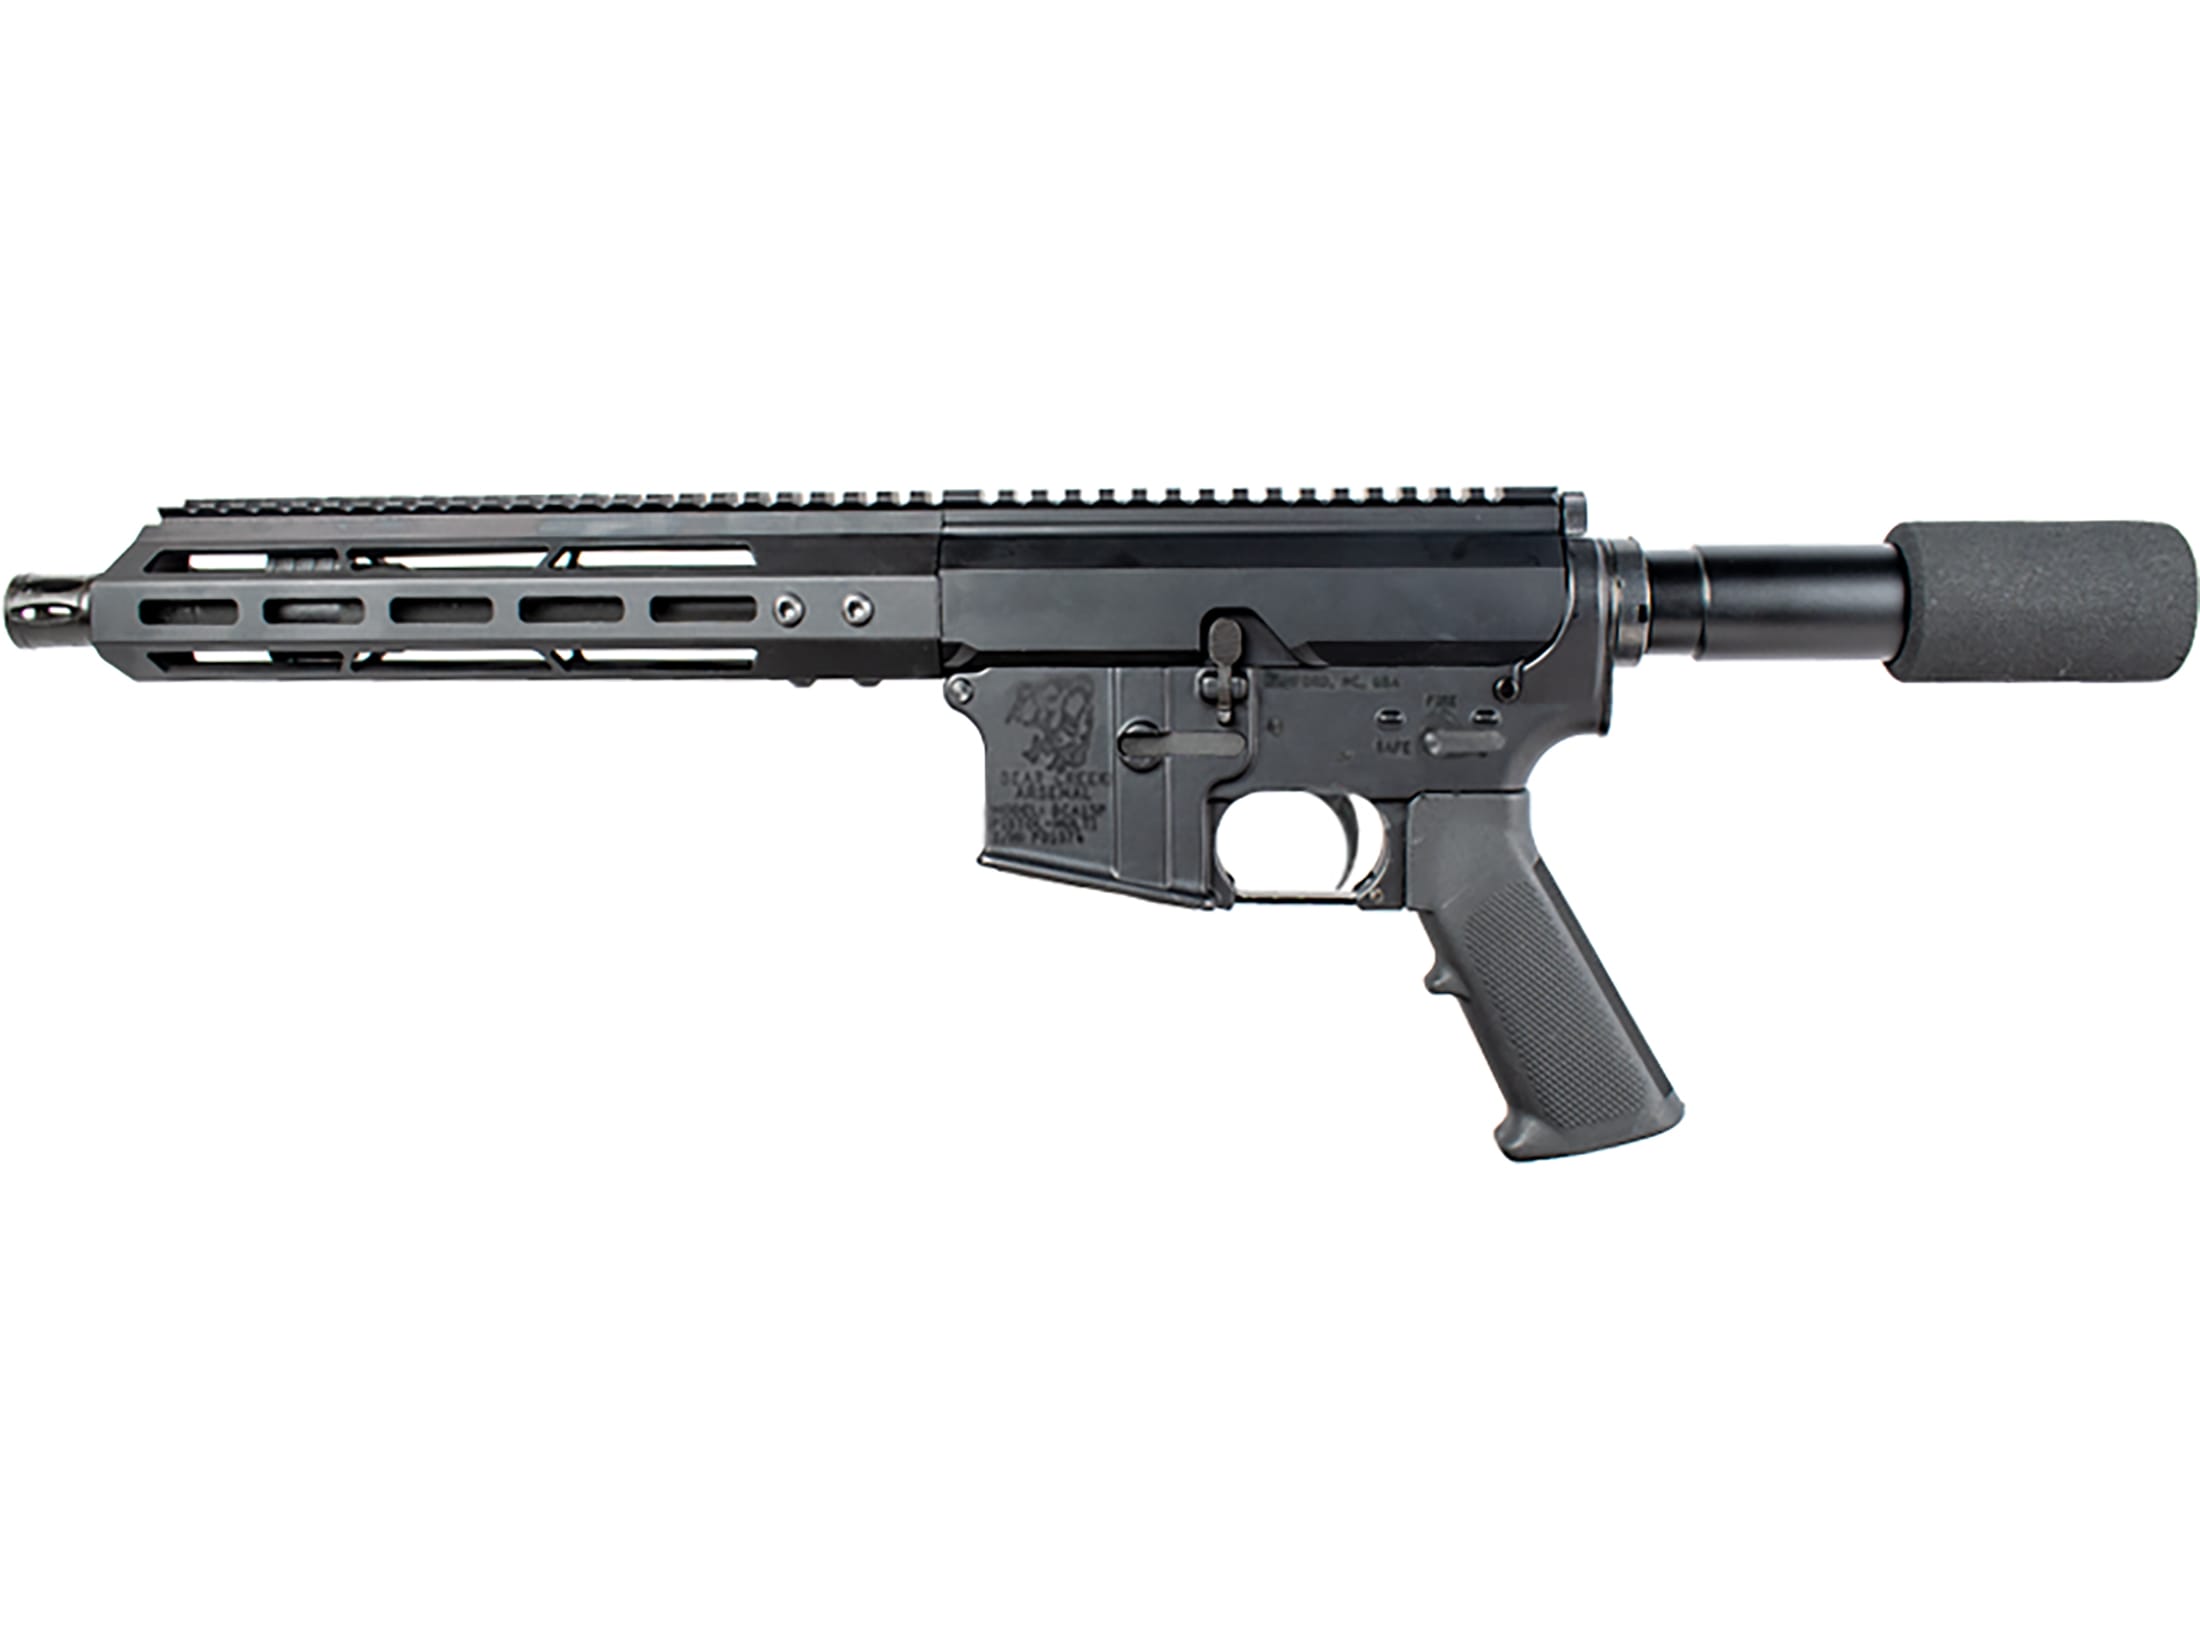 248957a1 - Bear Creek Arsenal AR-15 Side Charging Semi-Automatic Centerfire Pistol